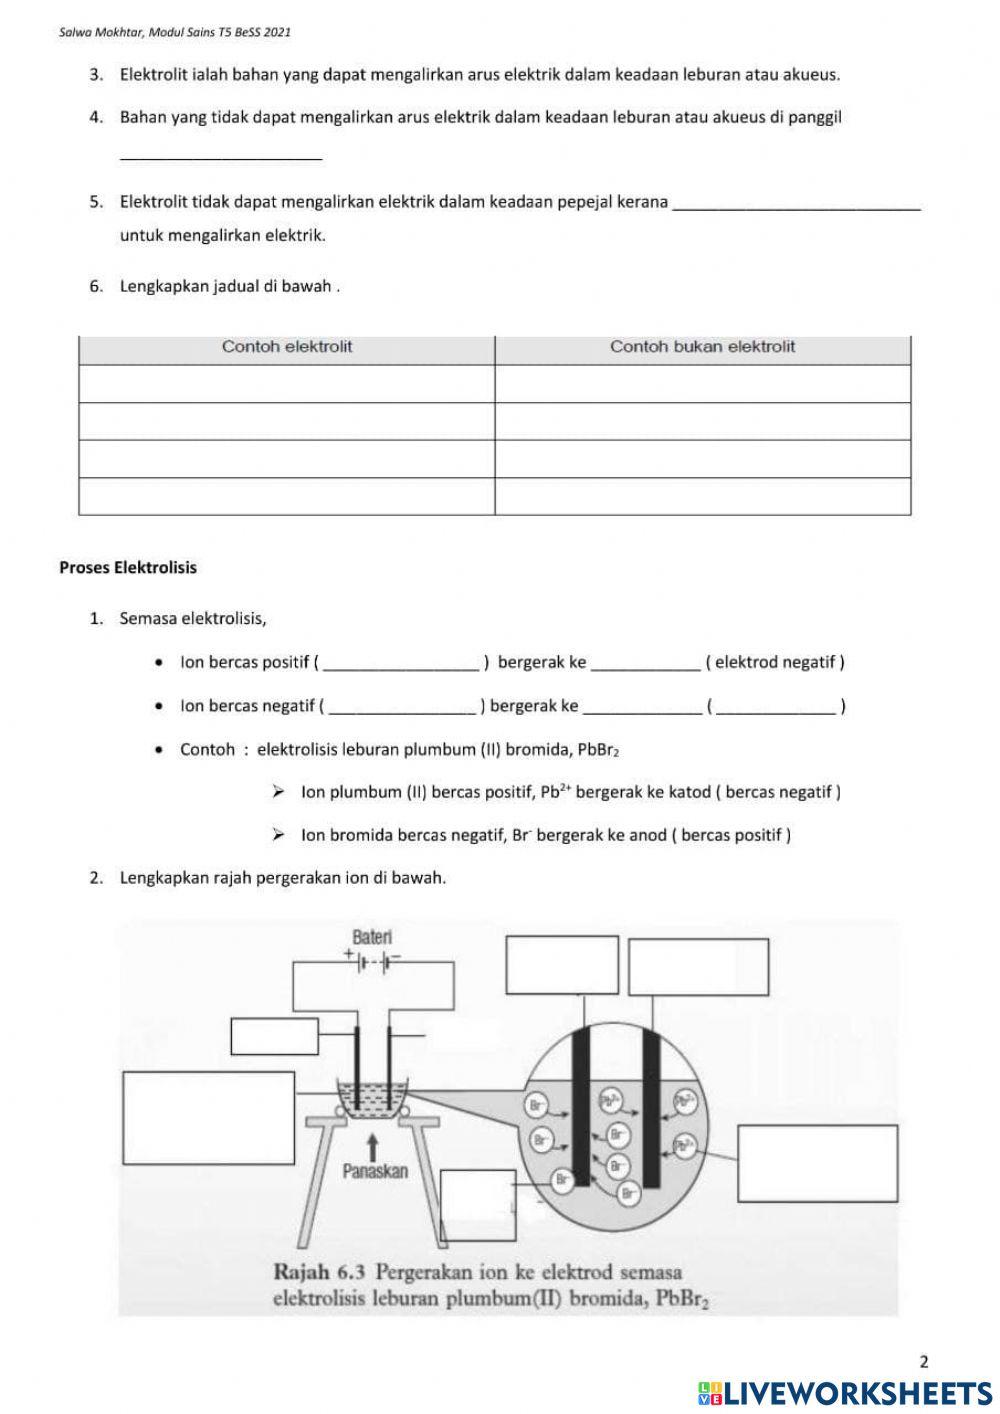 Modul bab 6 (6.1 sel elektrolitik) pg 2